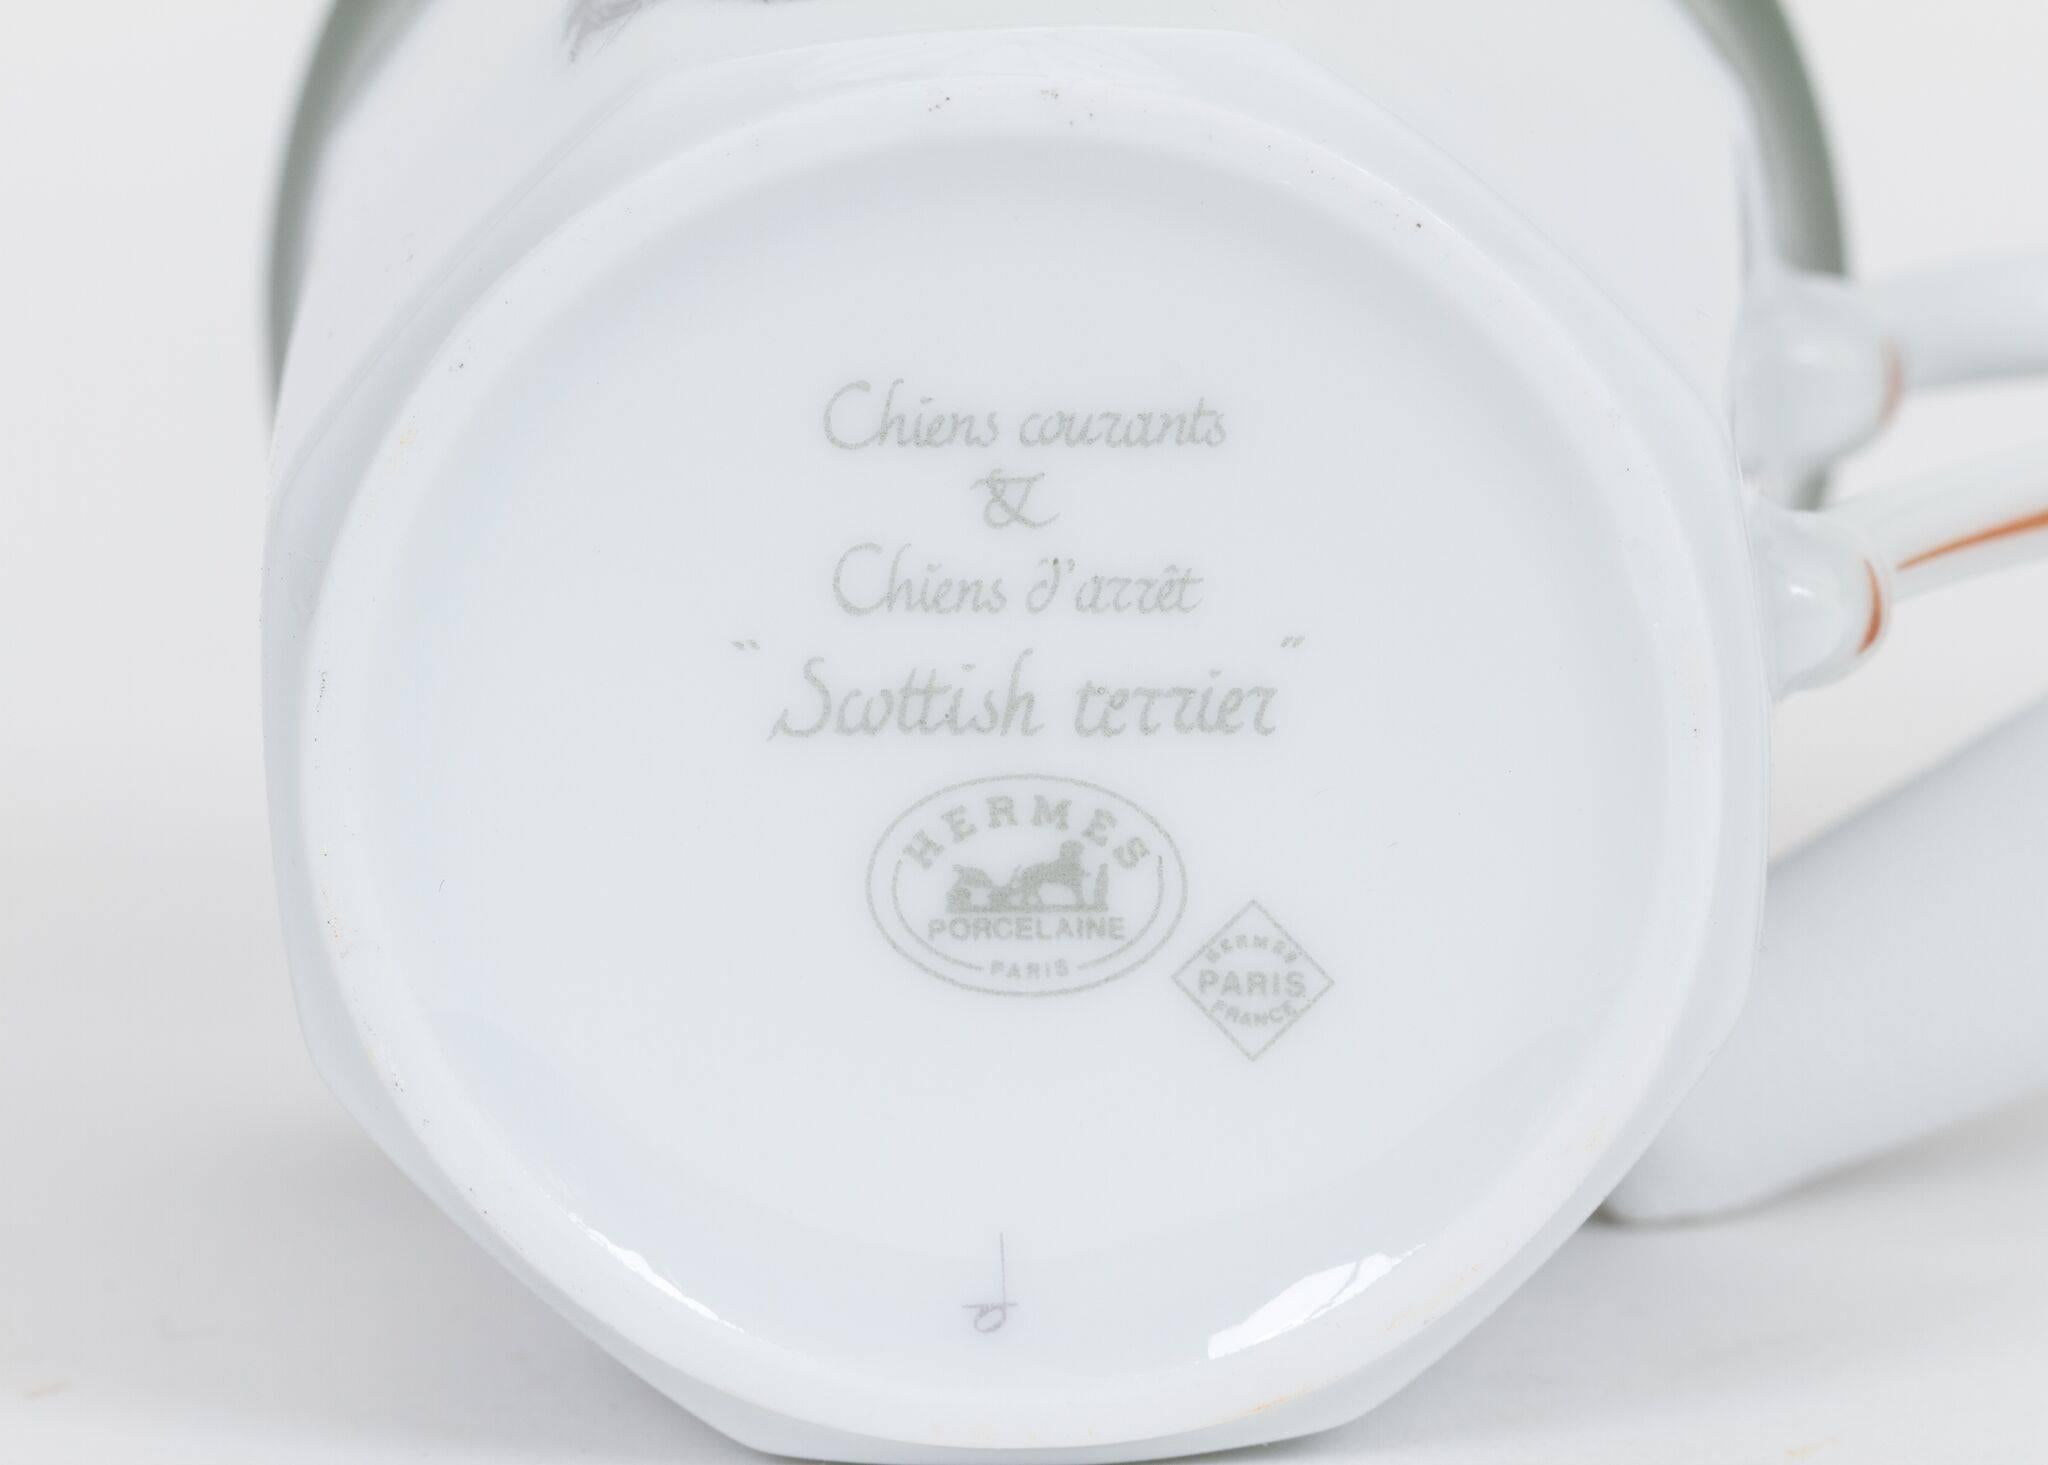 Hermès Scottish Terrier Teacups, S/2 1